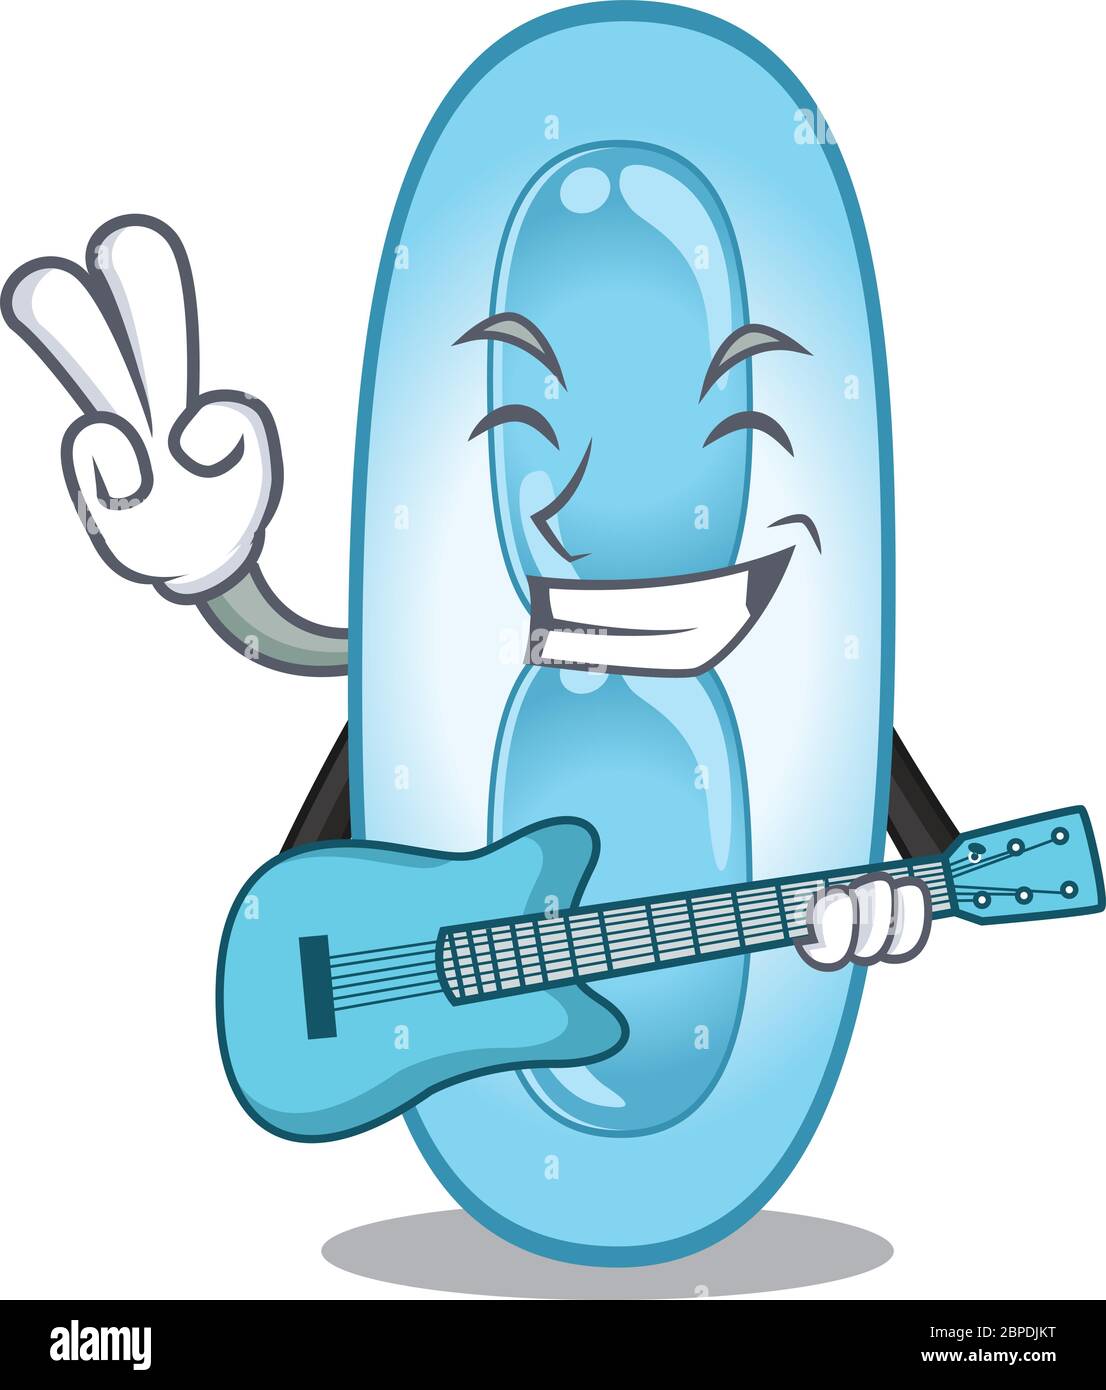 brilliant musician of klebsiella pneumoniae cartoon design playing music with a guitar Stock Vector